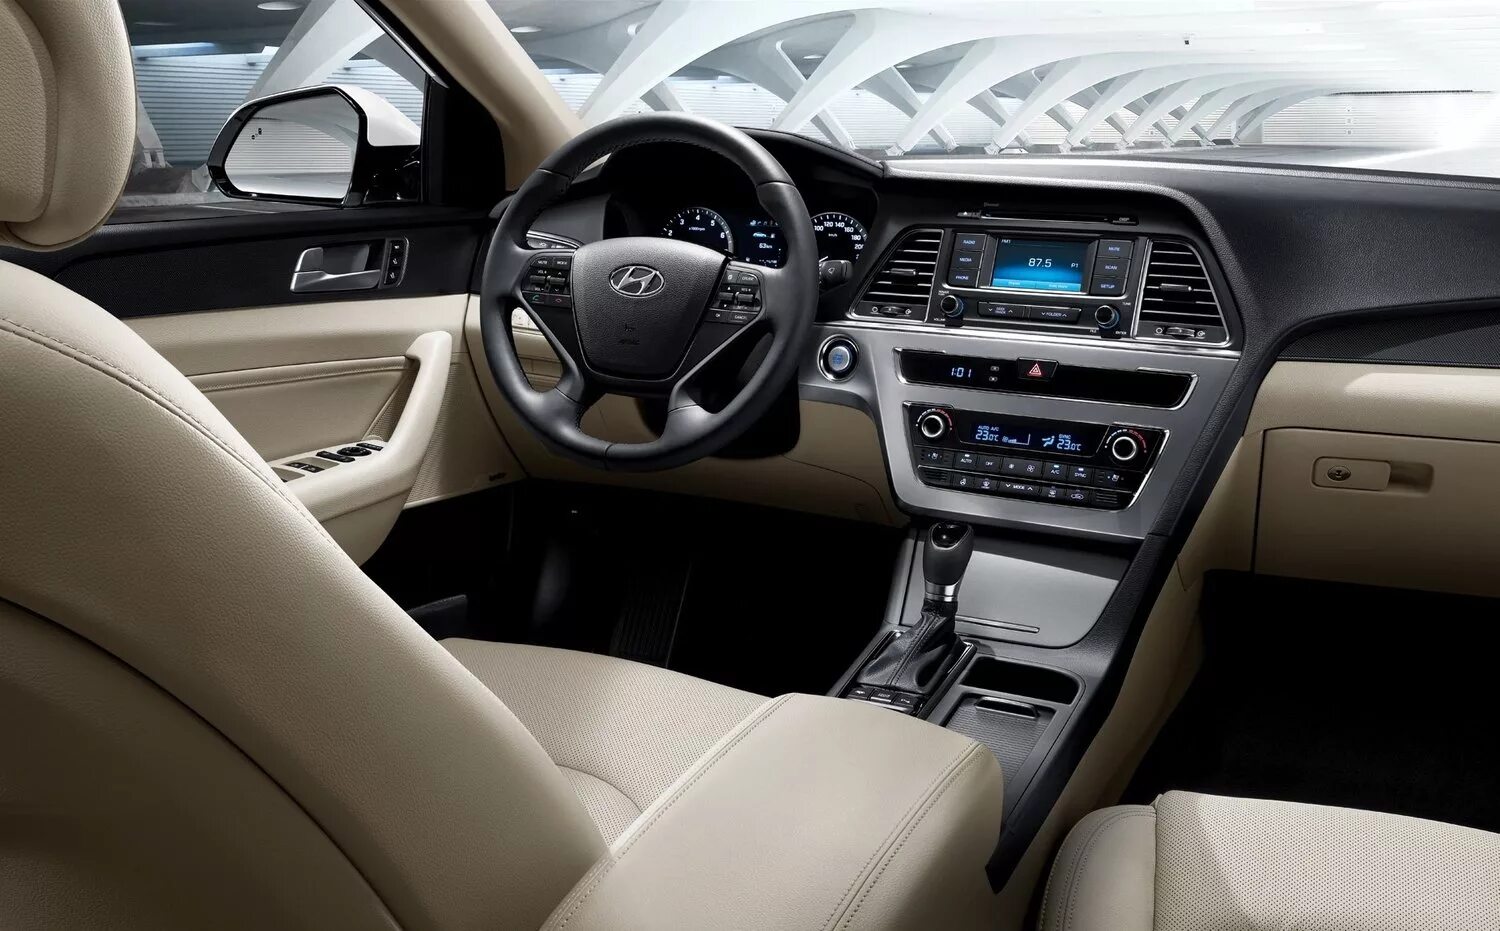 Sonata Hyundai комплектации 2014. Hyundai Sonata 2016 Interior. Hyundai Sonata 2014 Interior. Hyundai Sonata 2016 салон. Новая хендай соната цена и комплектация